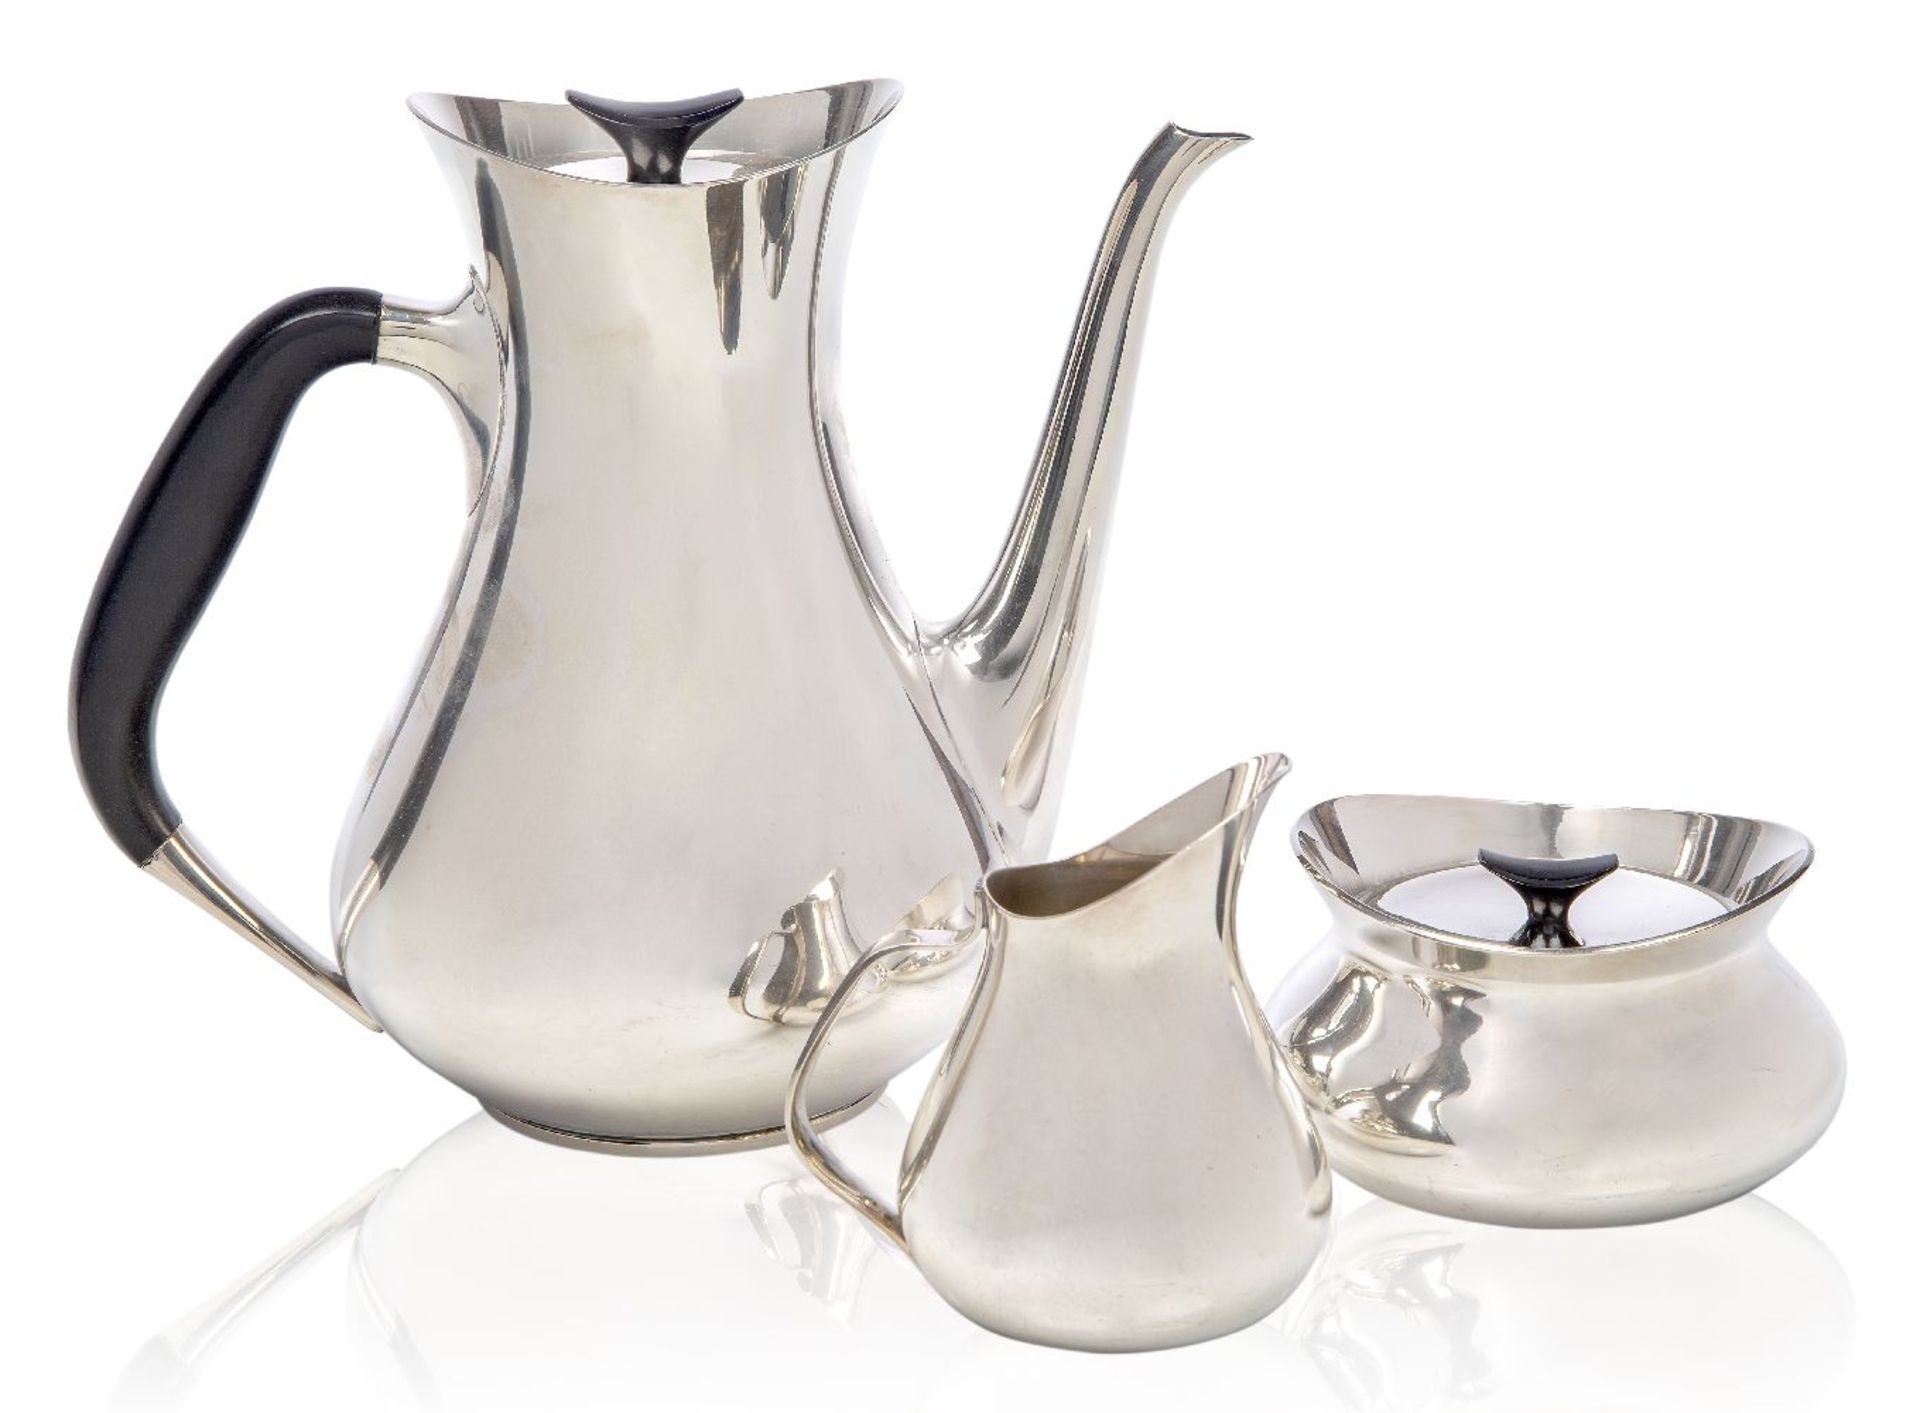 Hans Bunde (Danish 1919-1996), a three piece silver plate coffee service for Cohr, c.1955, each